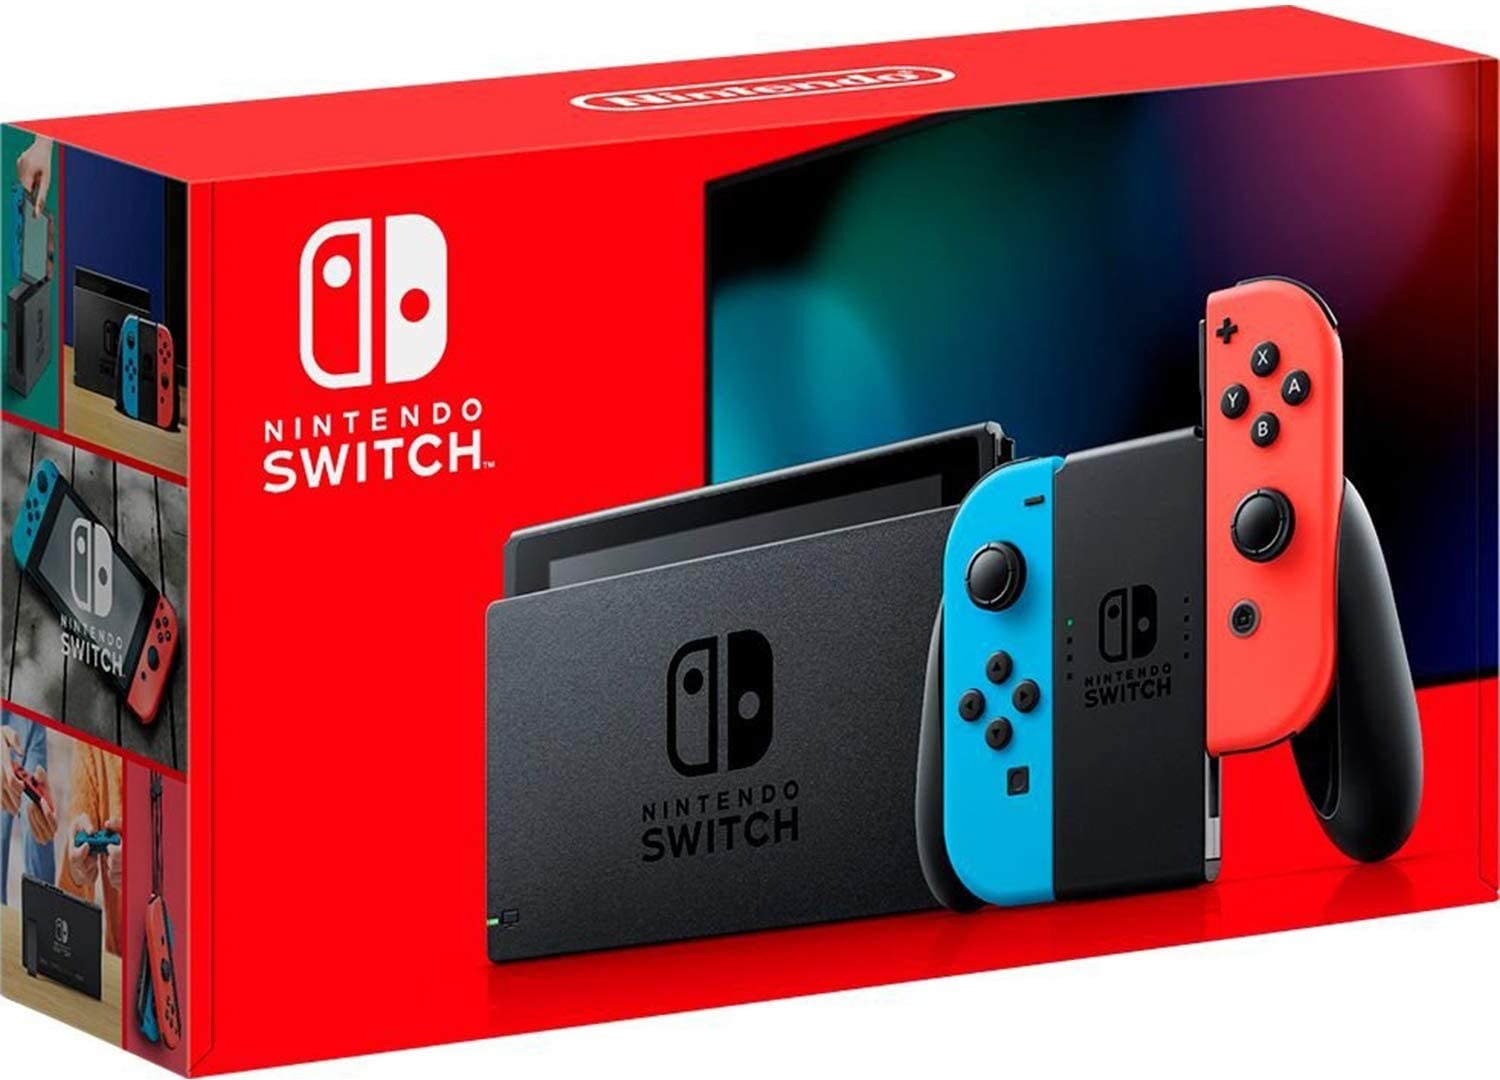 Nintendo Switch box